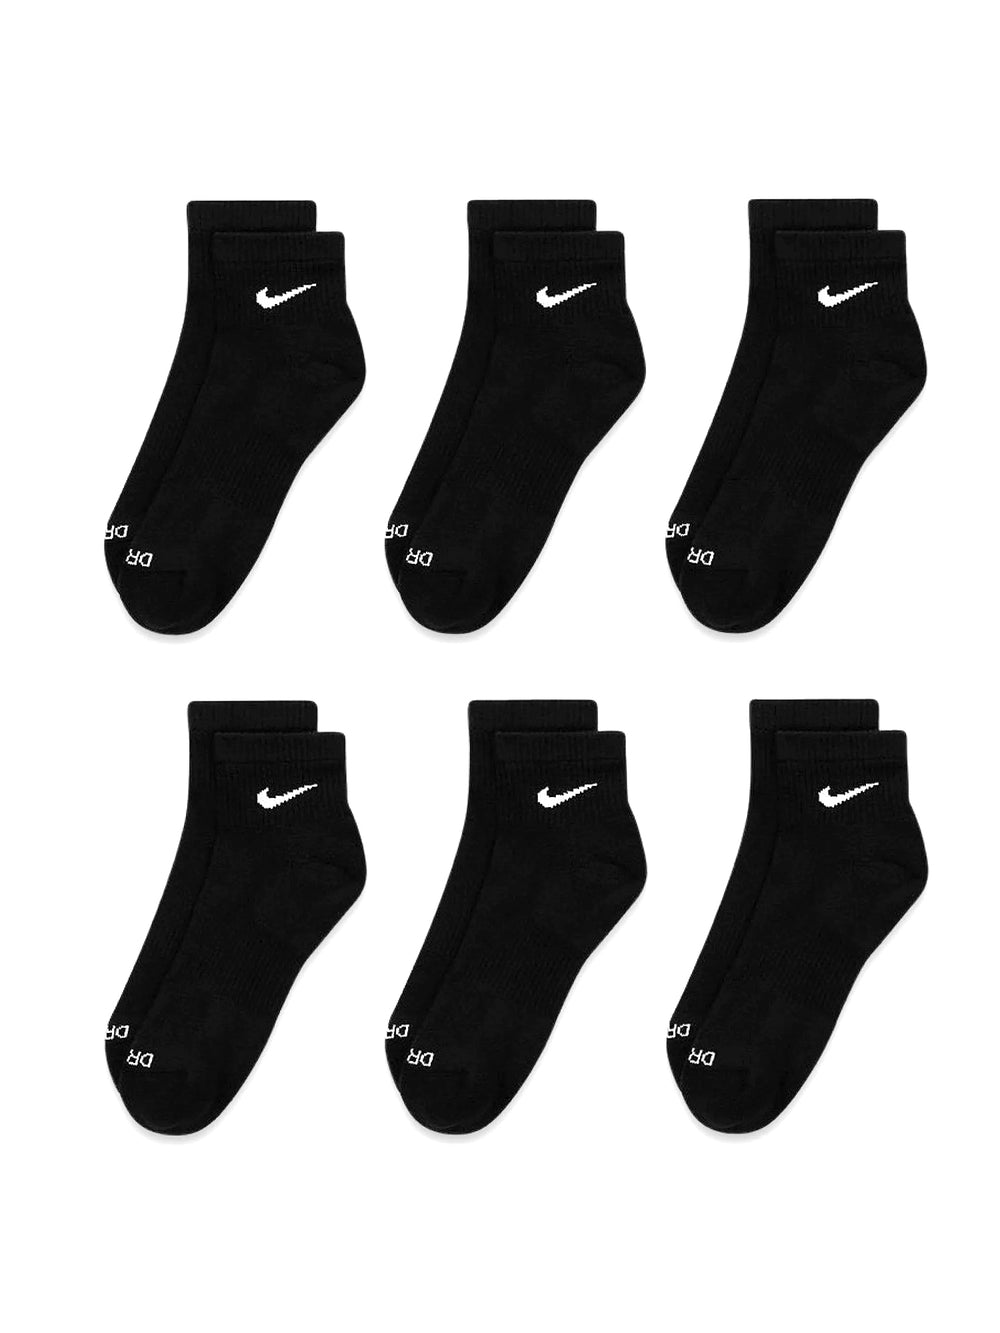 Nike Everyday Plus cushioned socks in white 6 pack